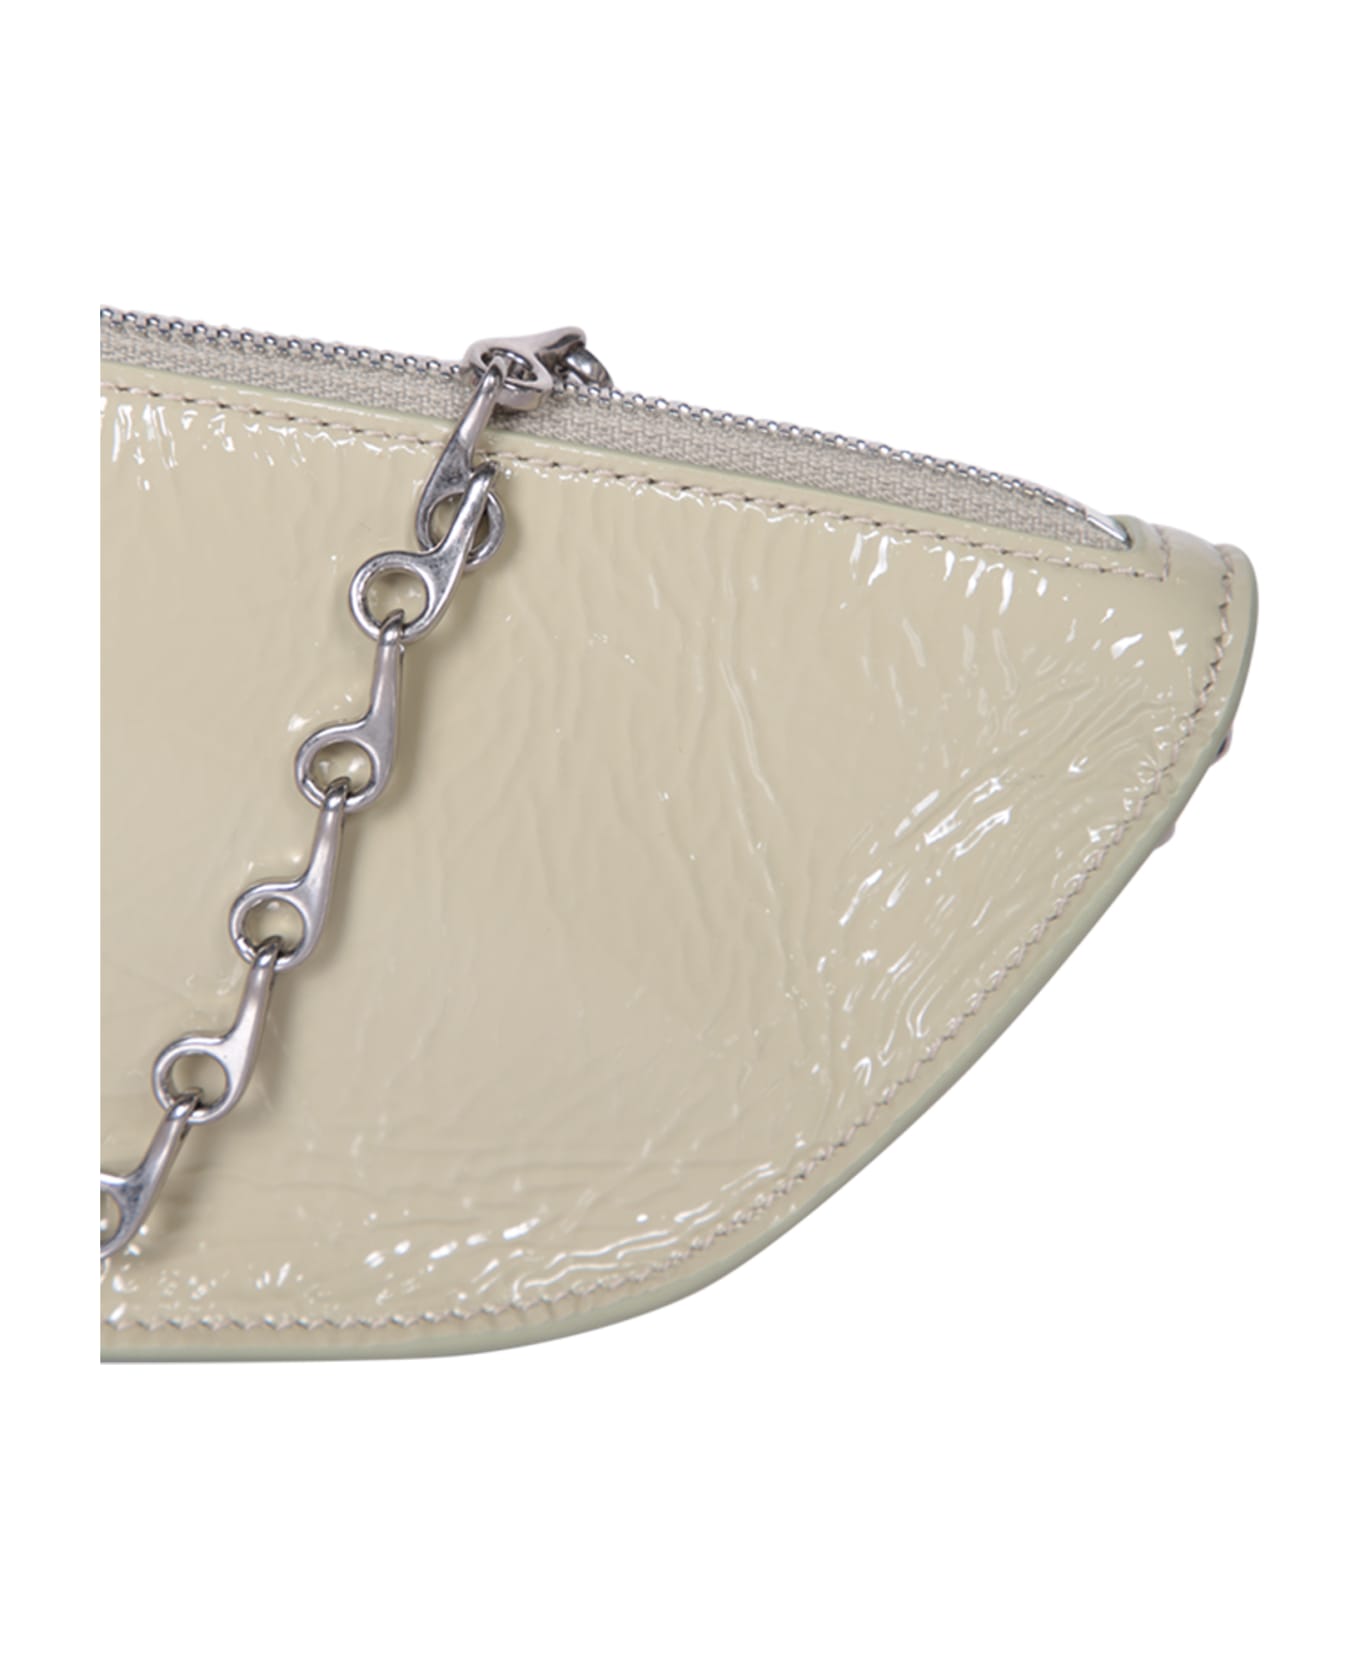 Burberry Wmls Micro Sling Shield Crossbody Bag - Beige